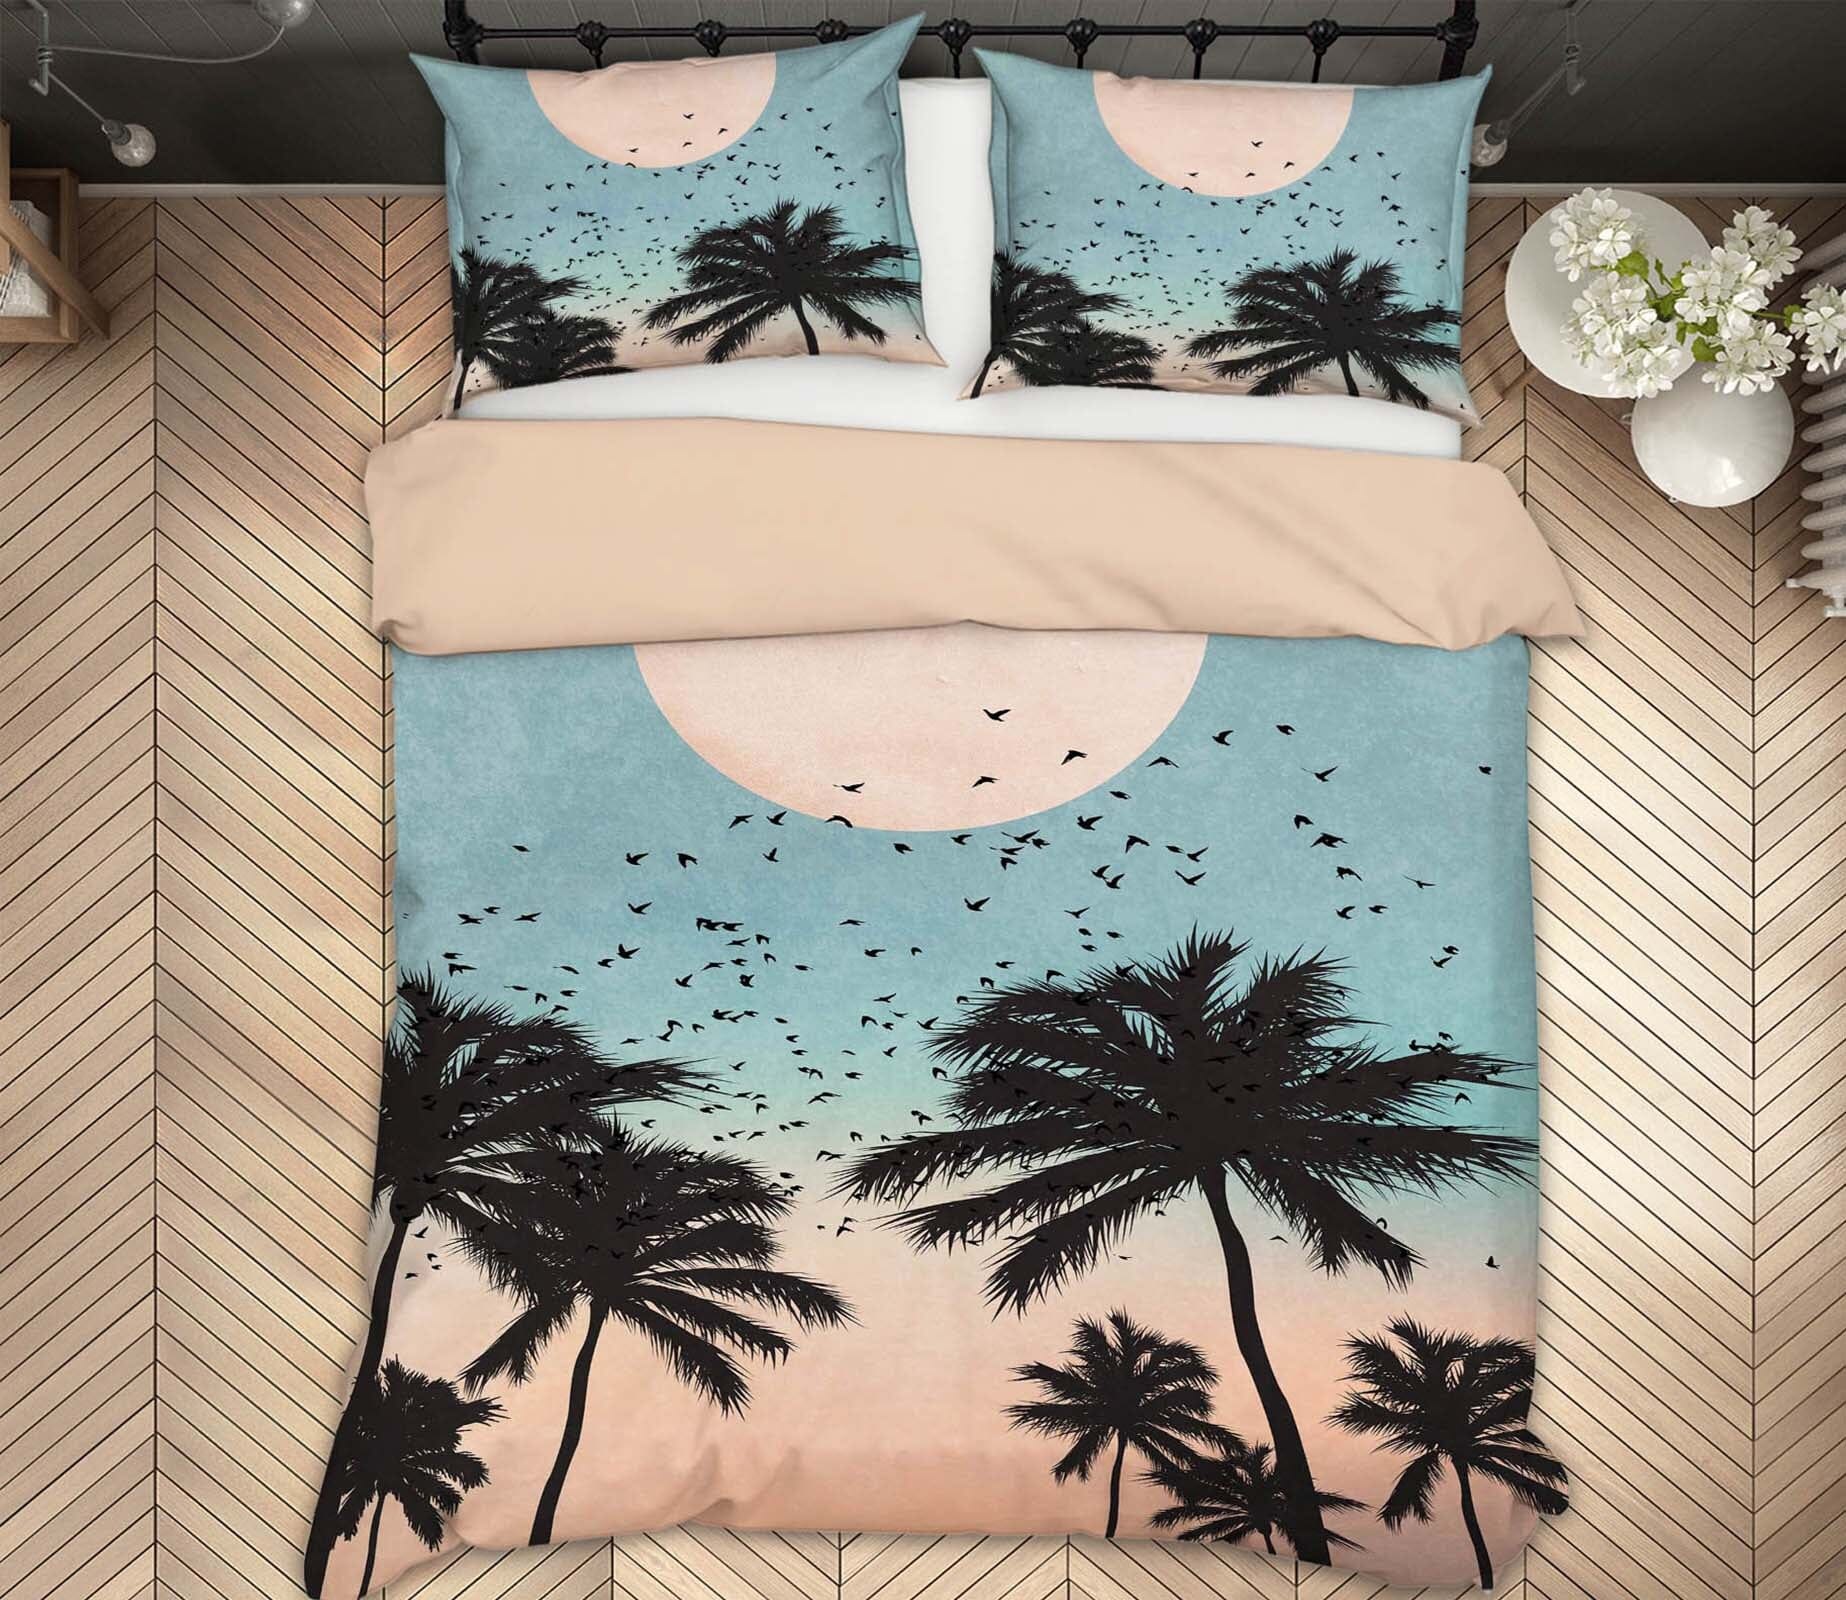 3D Sunrise 2014 Boris Draschoff Bedding Bed Pillowcases Quilt Quiet Covers AJ Creativity Home 